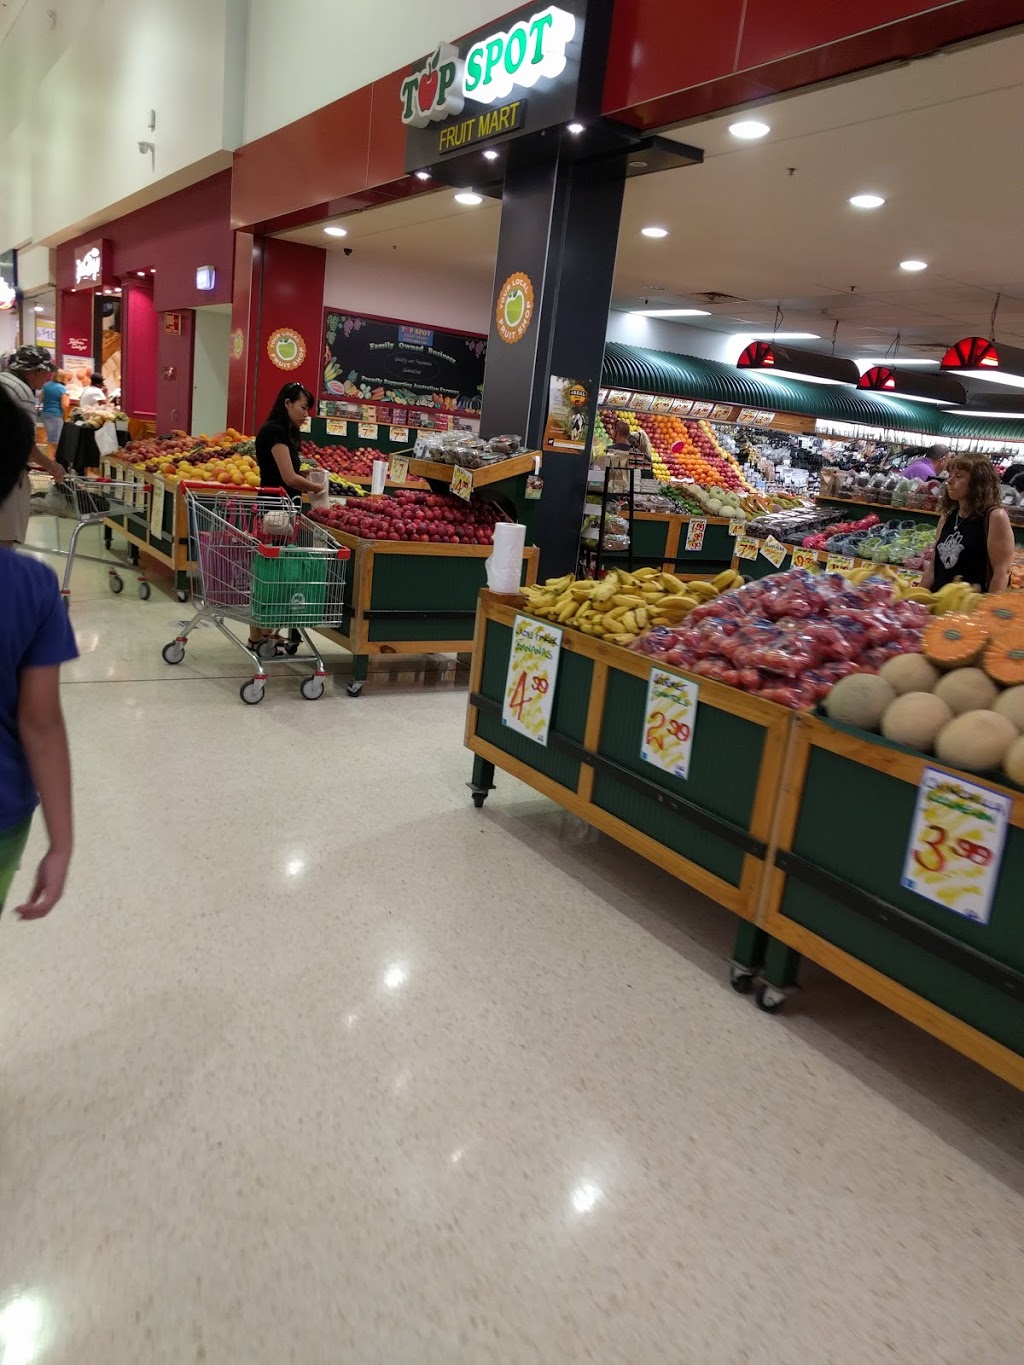 ALDI Aspley | supermarket | Aspley Hypermarket Shopping Centre, 59 Albany Creek Rd, Aspley QLD 4034, Australia